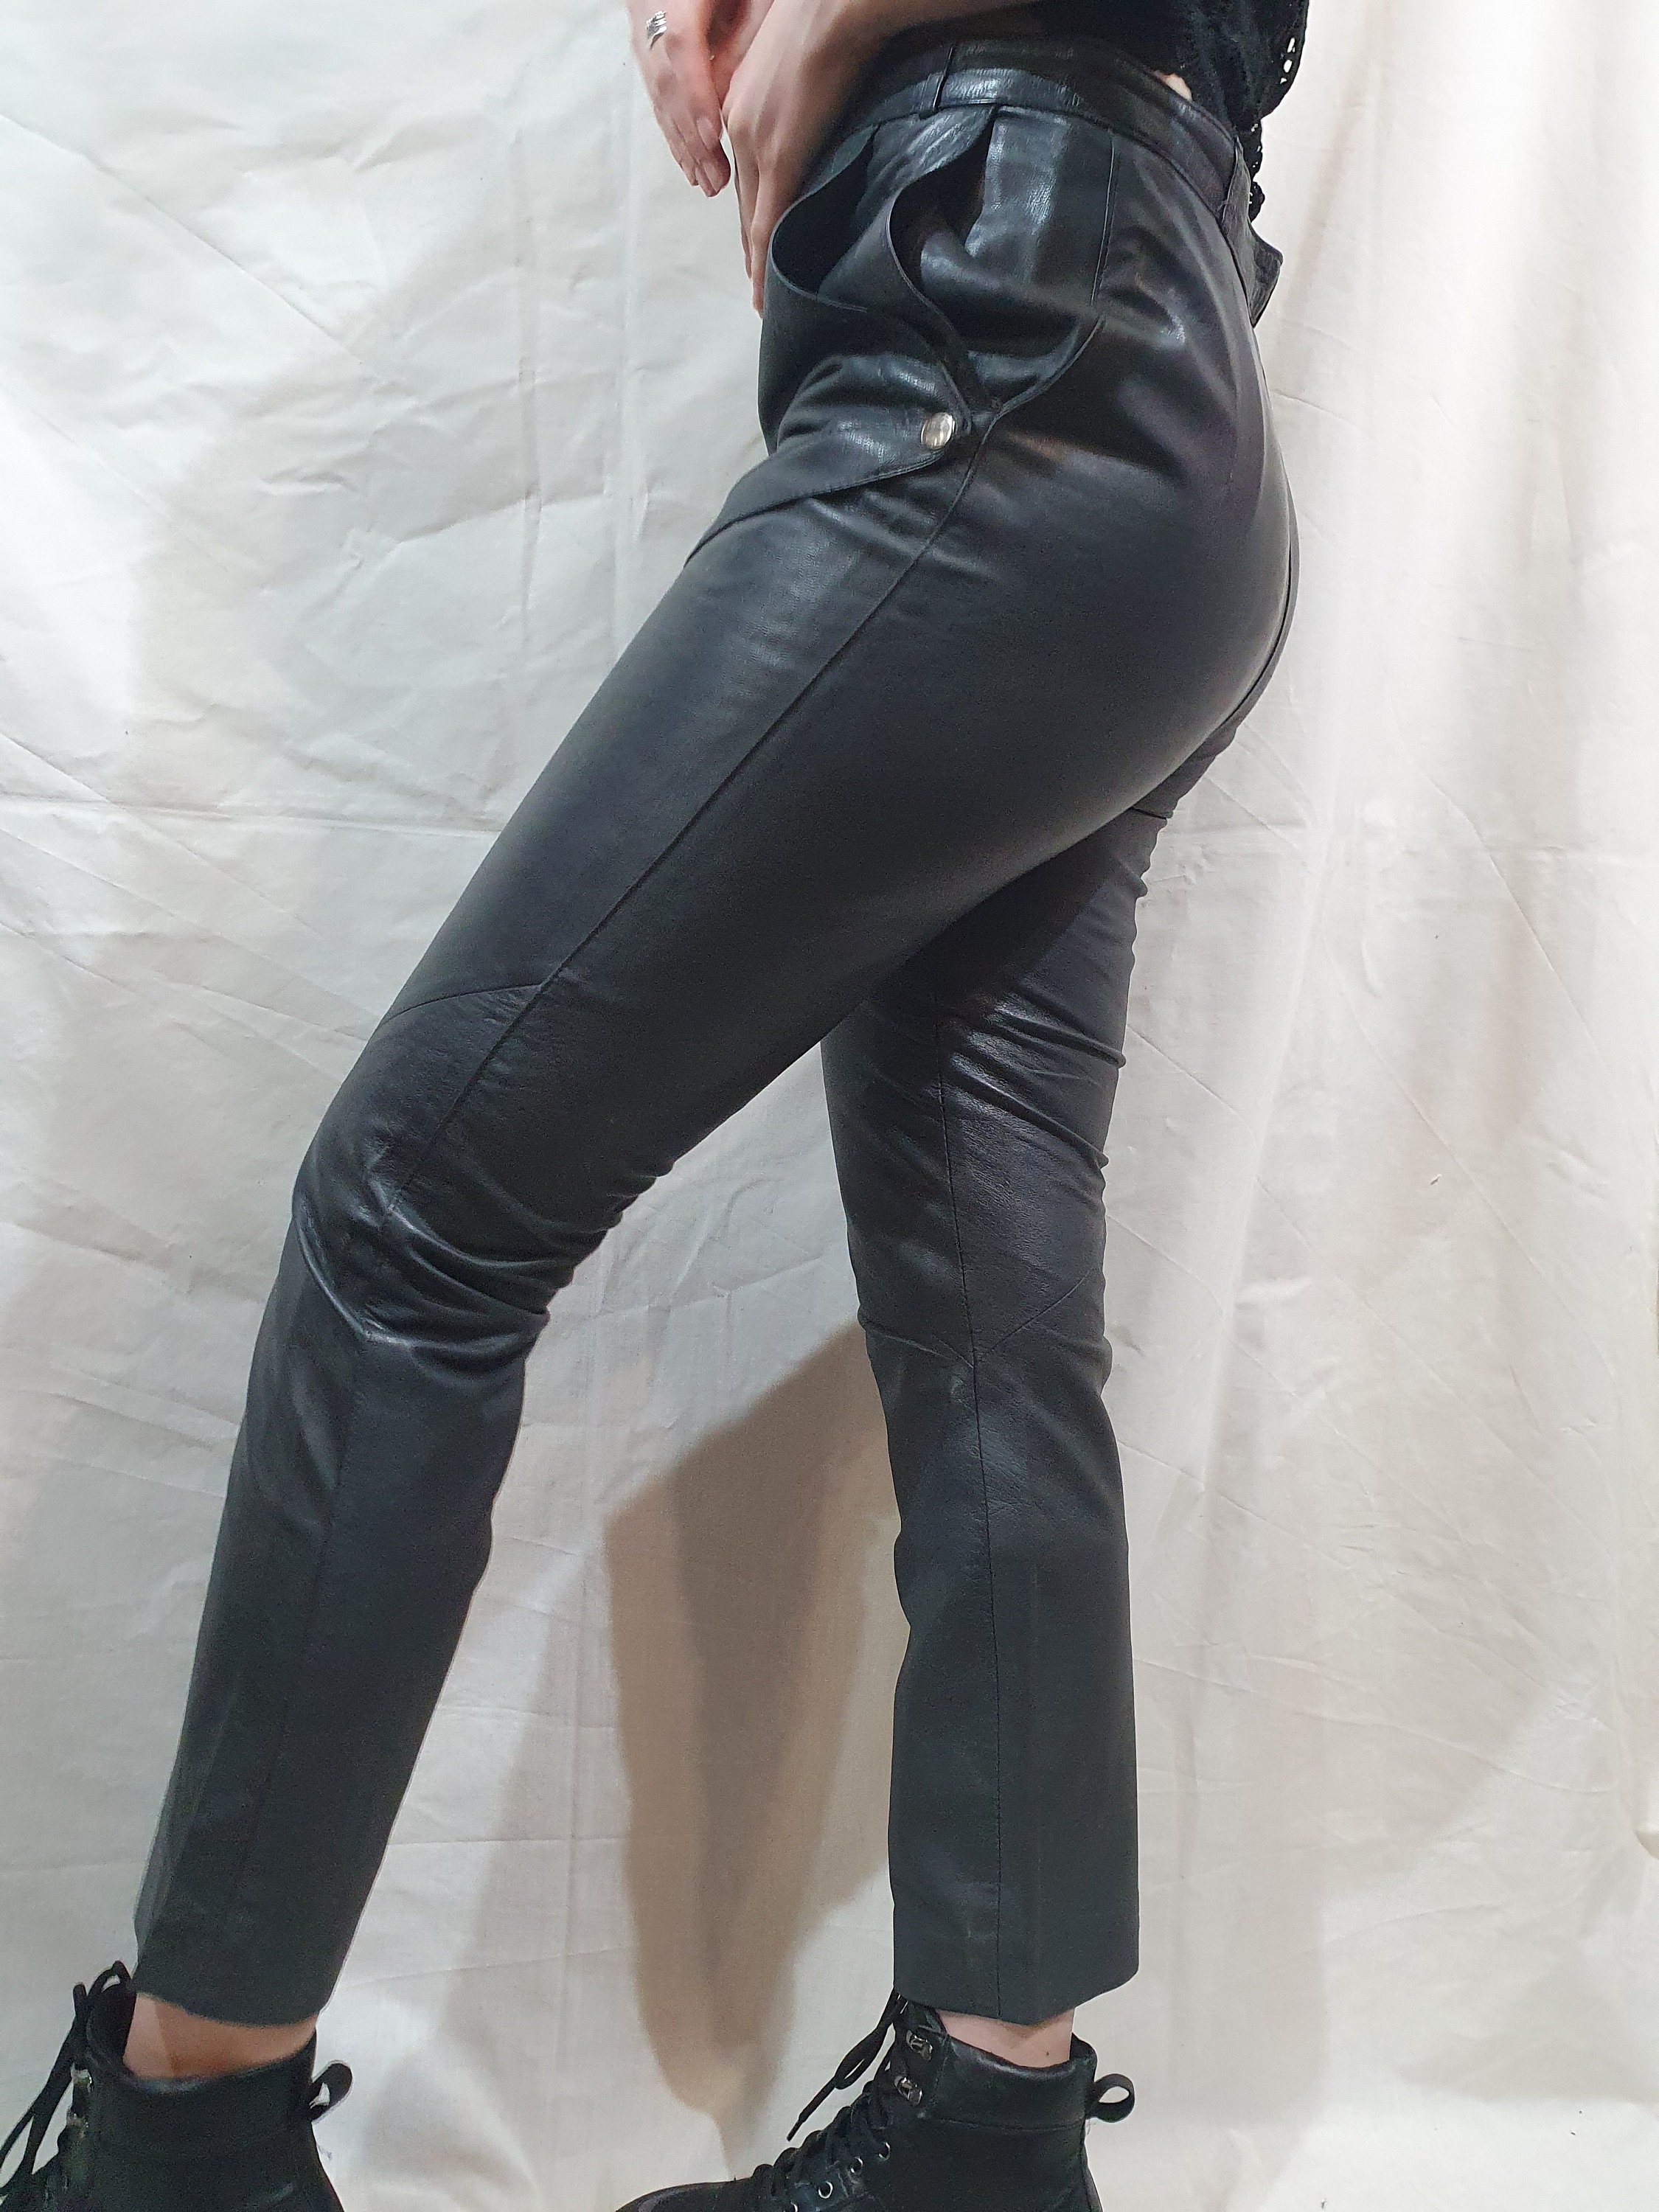 Lovely women's leather pants. Gray women's genuine | Etsy